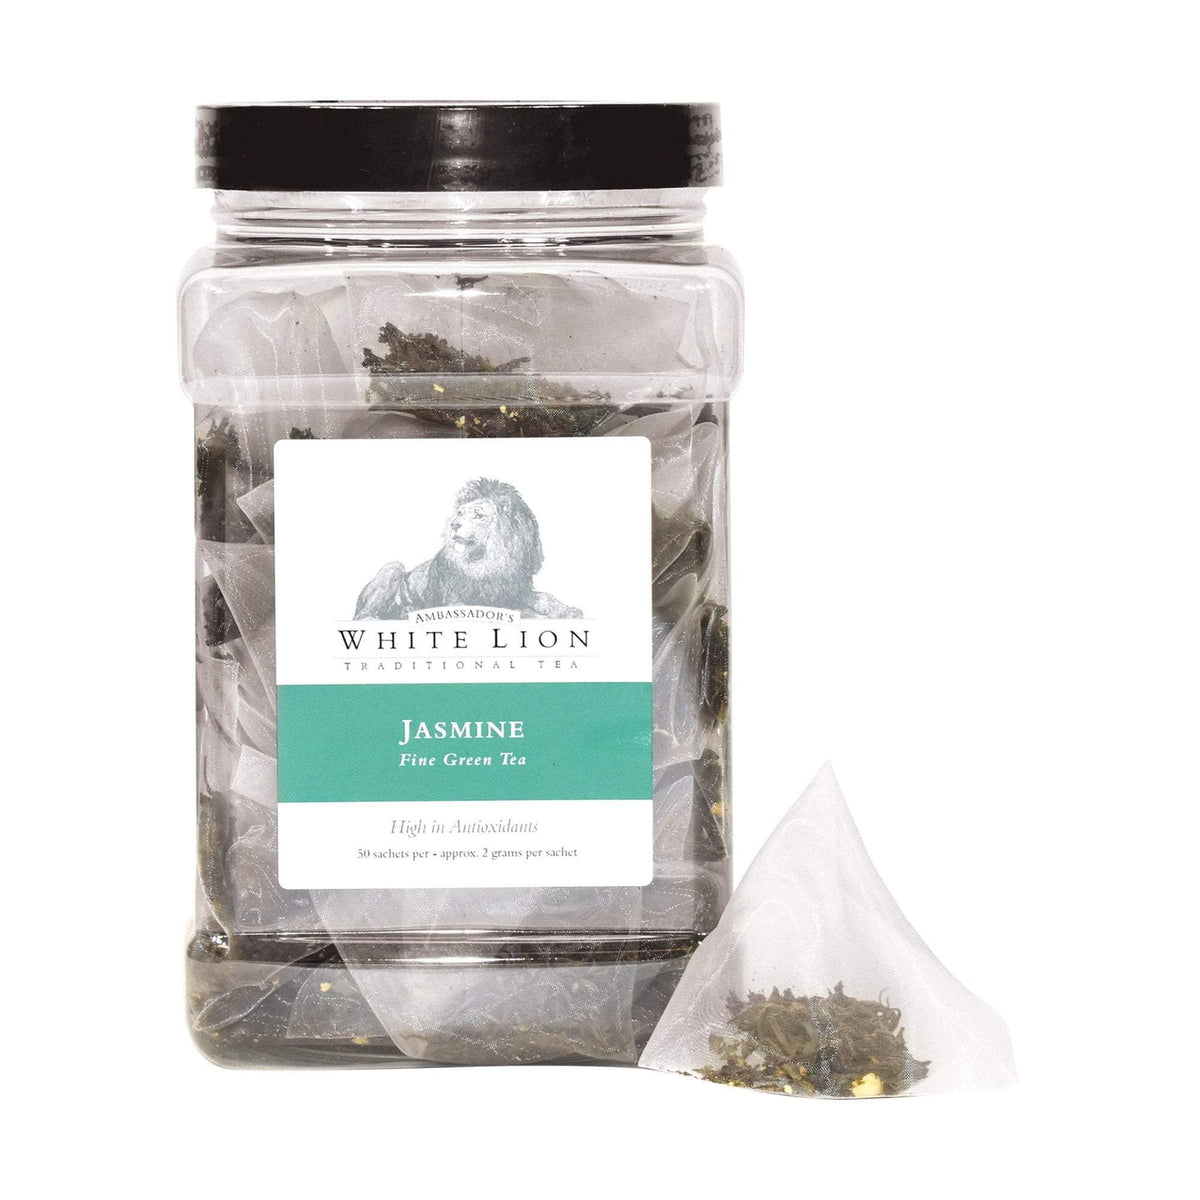 White Lion Organic Jasmine Tea